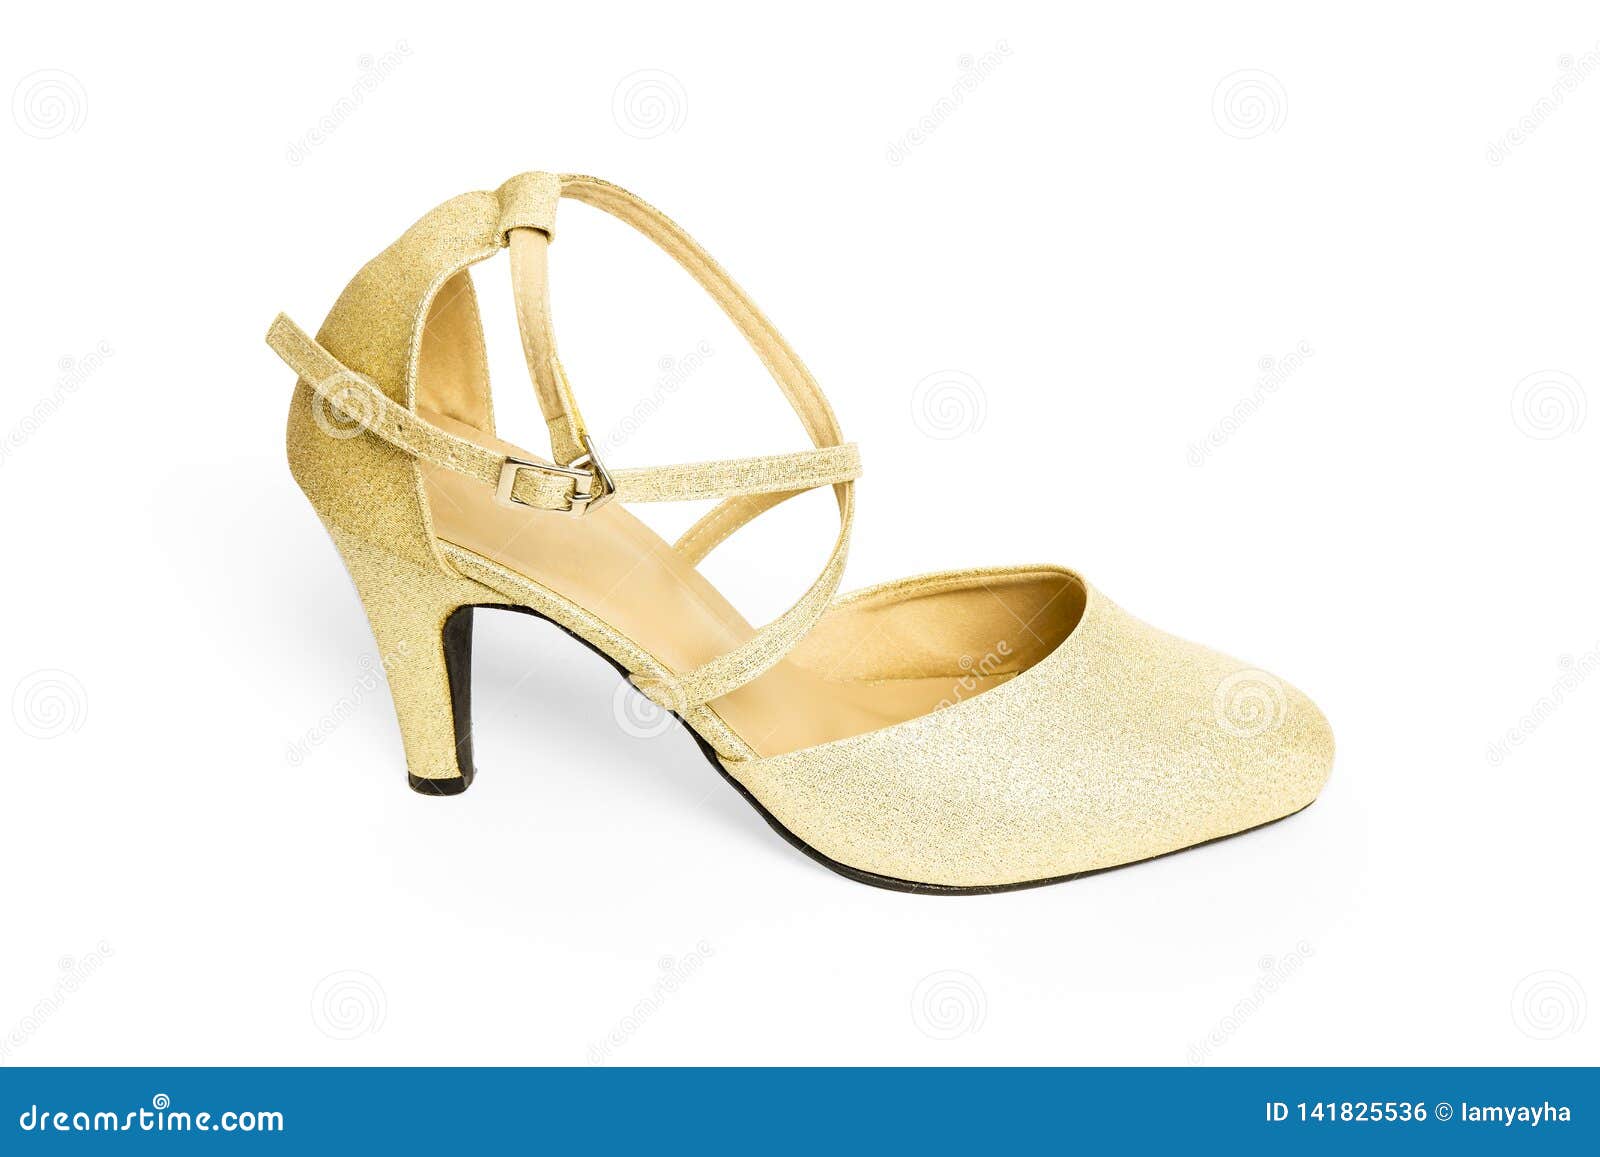 2020 New Arrival Golden/Silver Summer Sandals 12cm High heels Girls shining  Sandals shoes woman Ankle Strap Platform Sandals - AliExpress